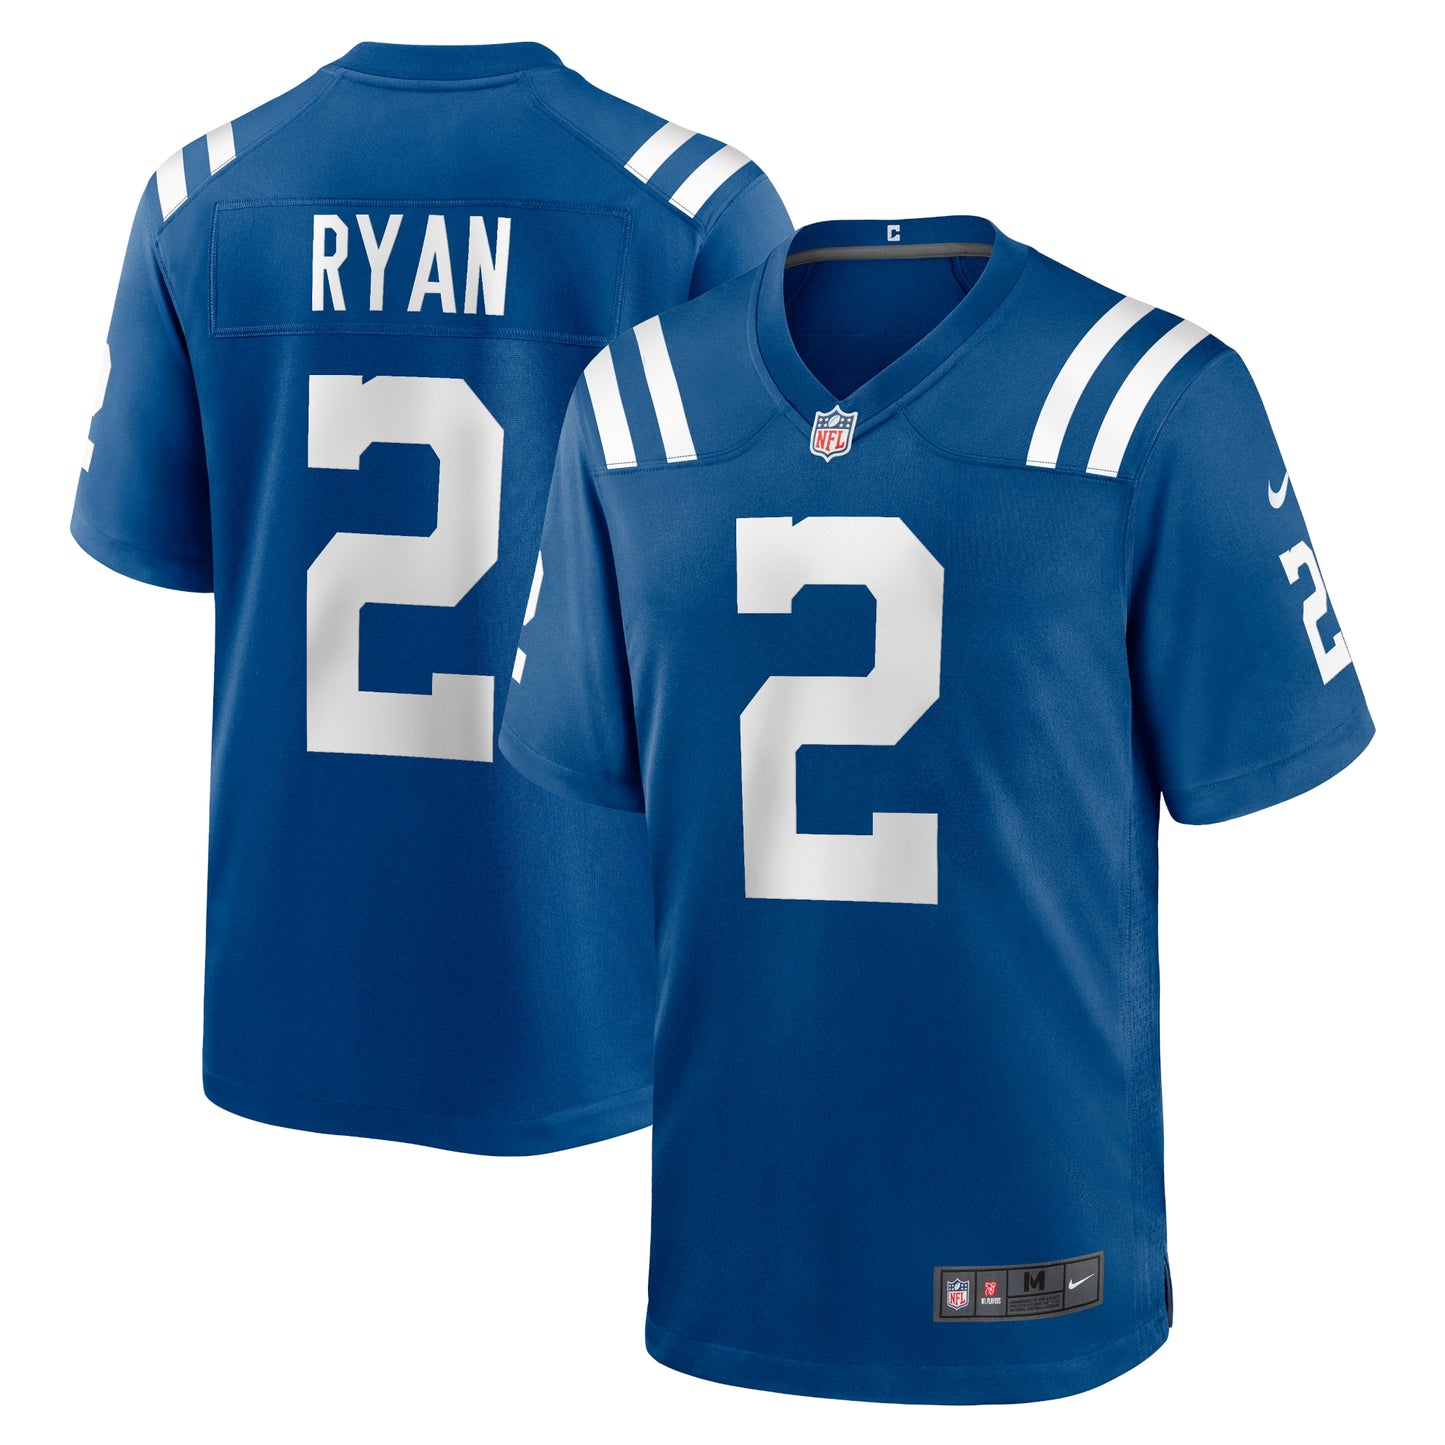 Matt Ryan Indianapolis Colts Nike Youth Game Jersey - Royal